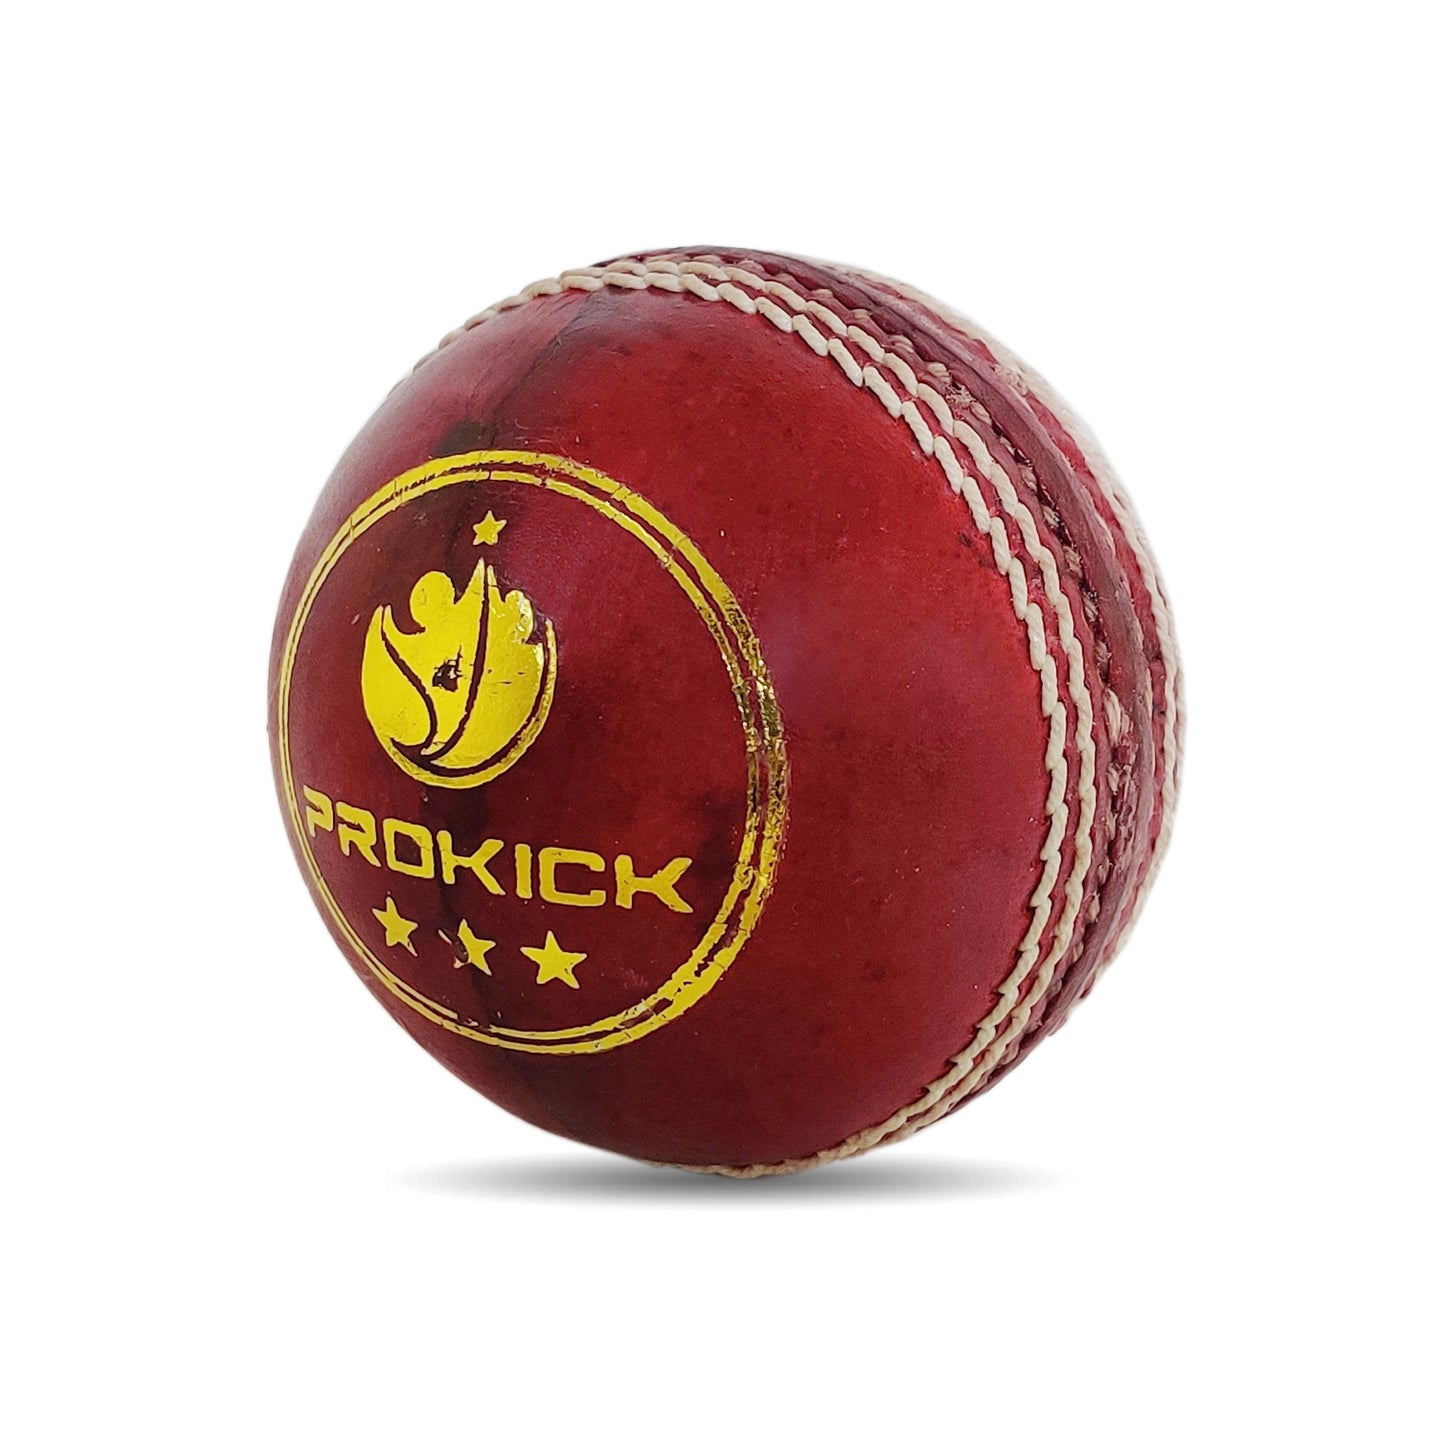 Prokick Club Four Piece Leather Cricket Ball, 12 Pc (Red) - Best Price online Prokicksports.com